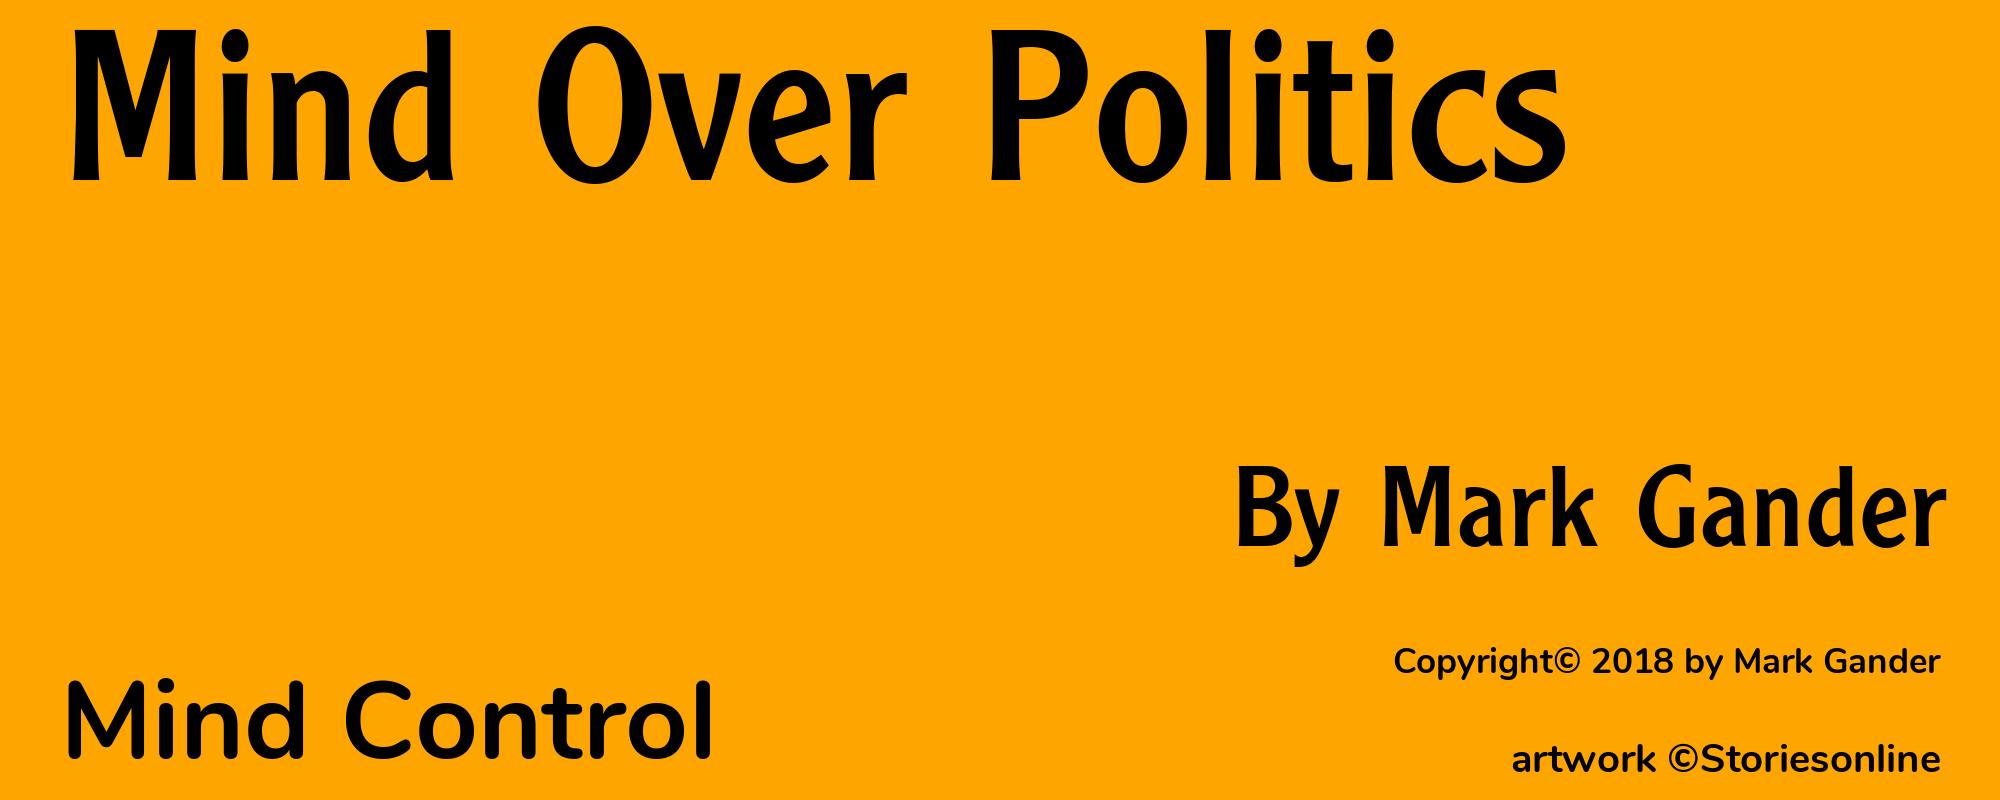 Mind Over Politics - Cover